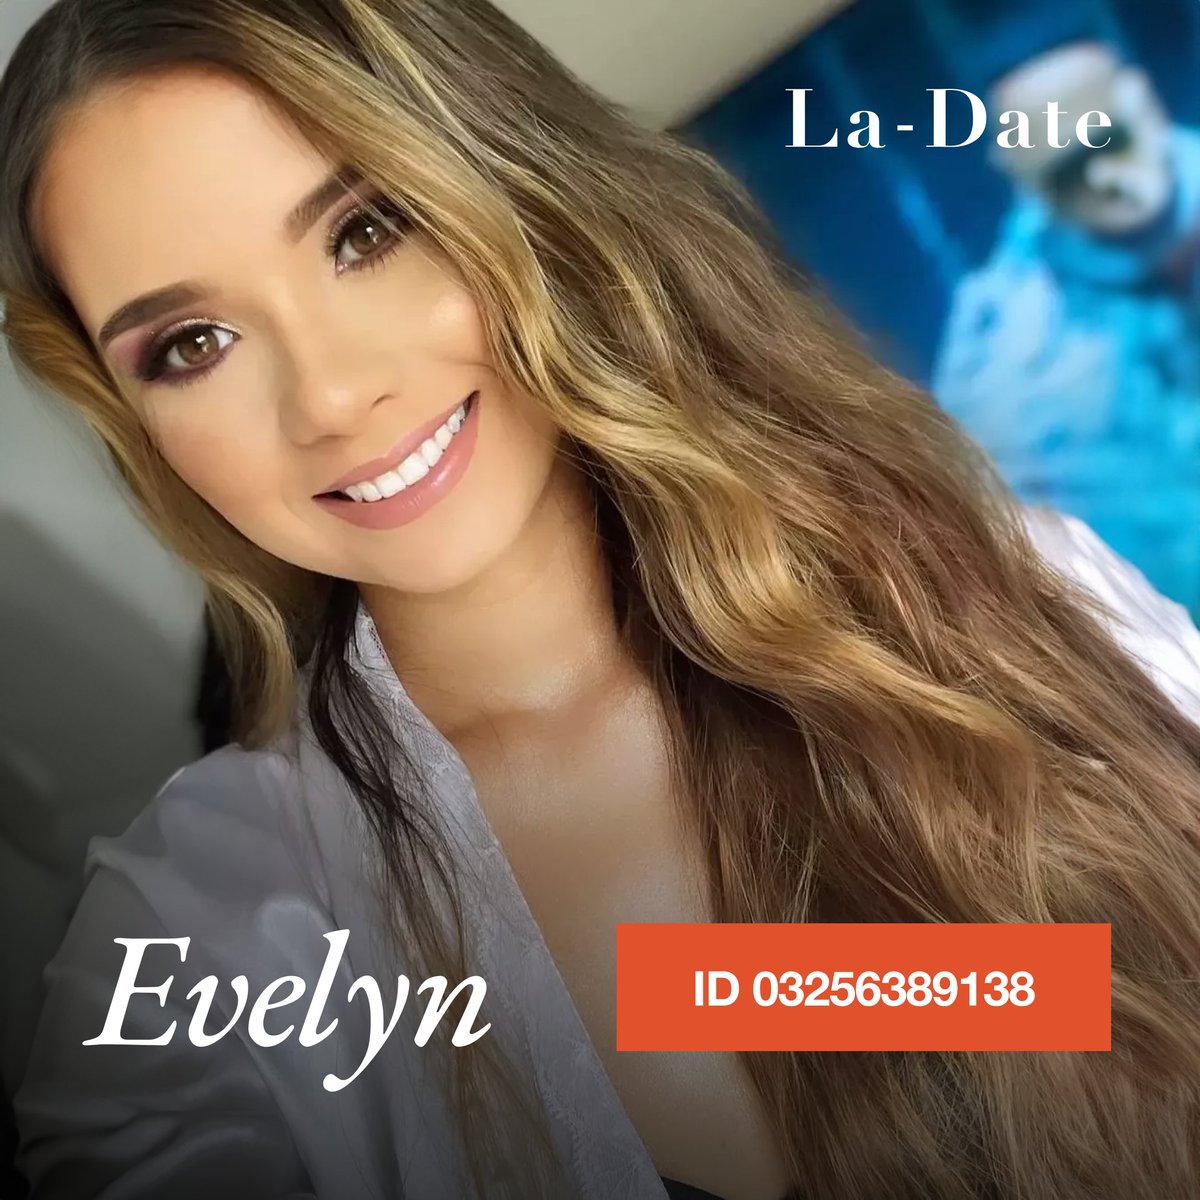 Say hi to Evelyn! 🤗

#LaDate #MeetNewPeple #Community